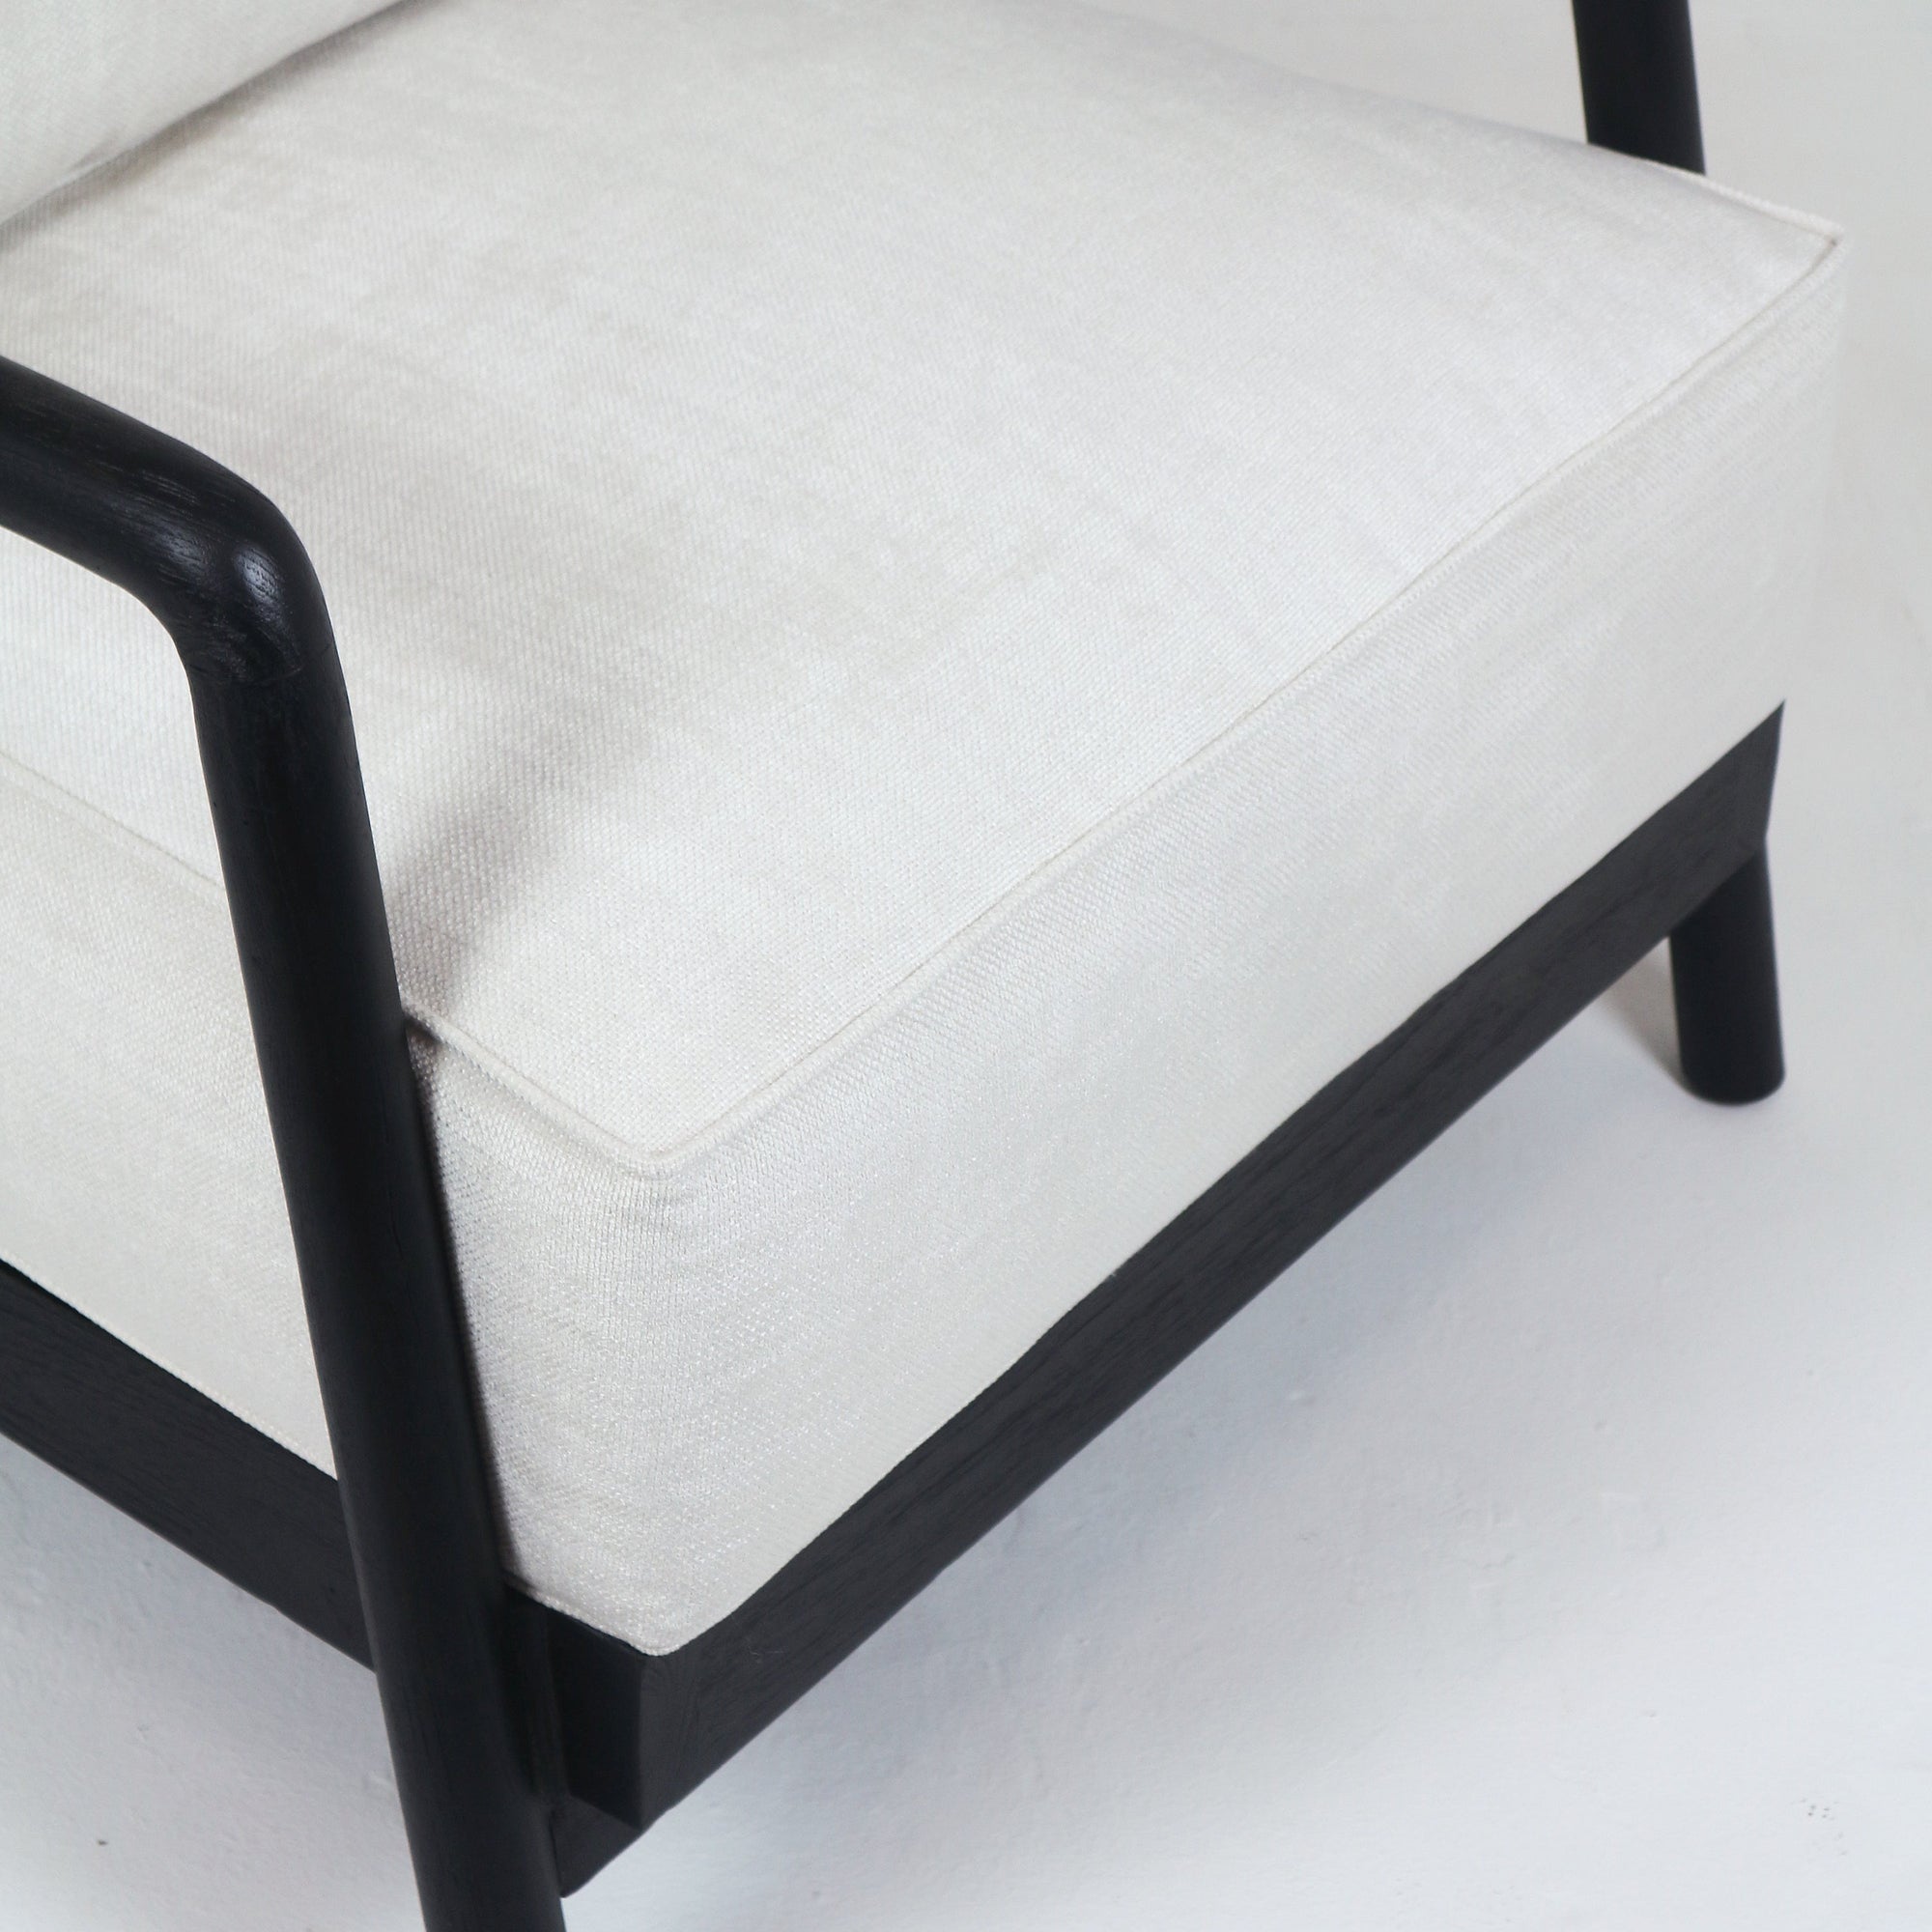 Cabriche Solid Teak & Leather Arm Chair - INTERIORTONIC